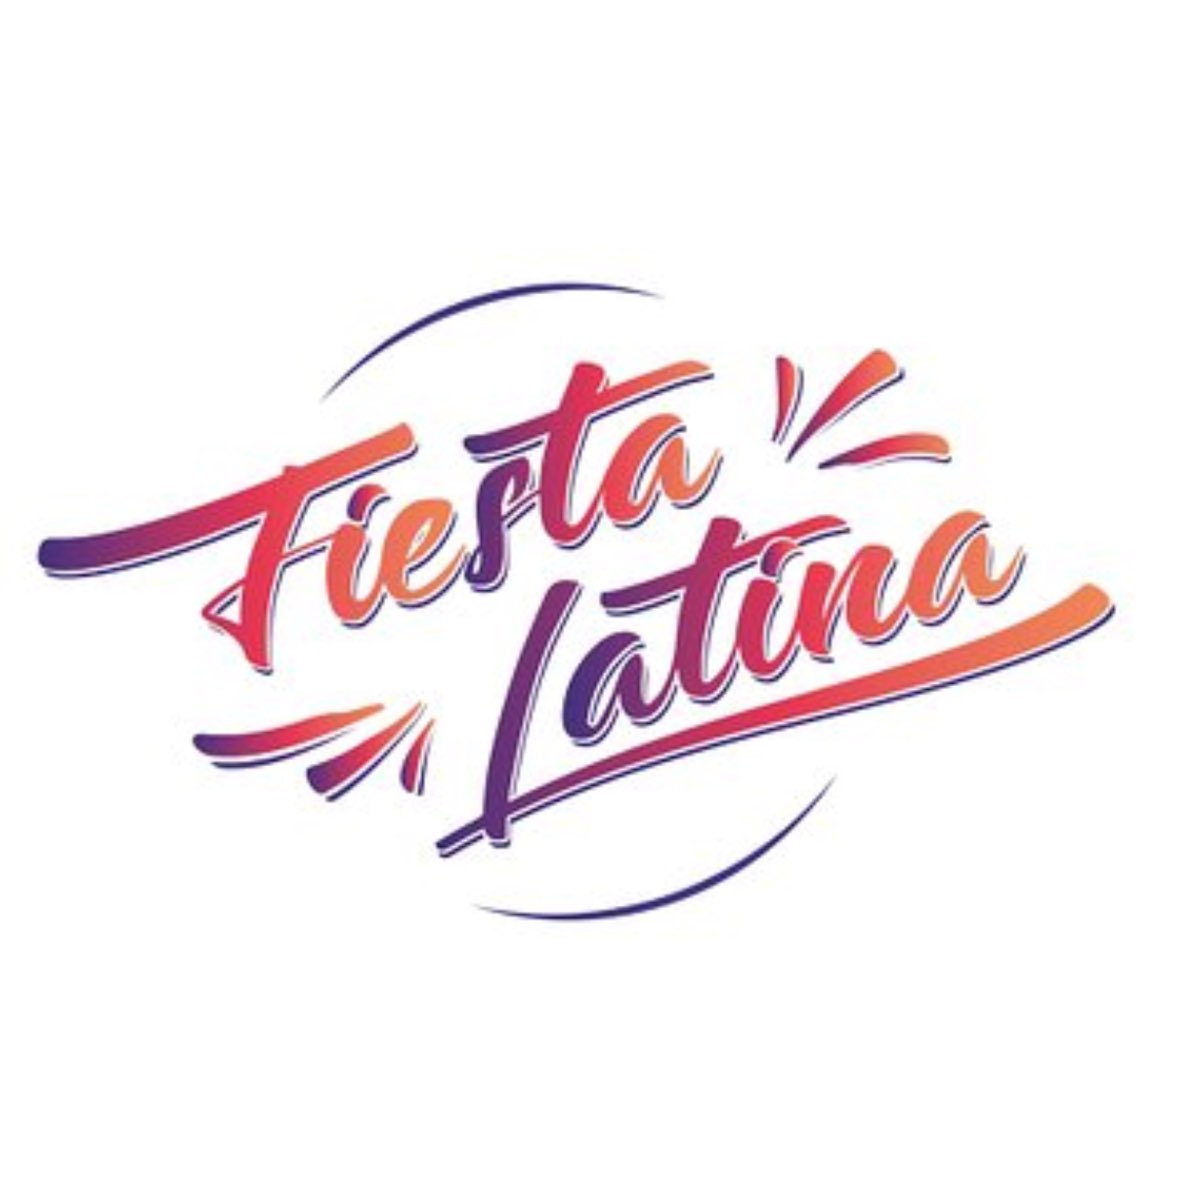 Fiesta Latina (feat. Boldan) - Single by Sashi on Apple Music